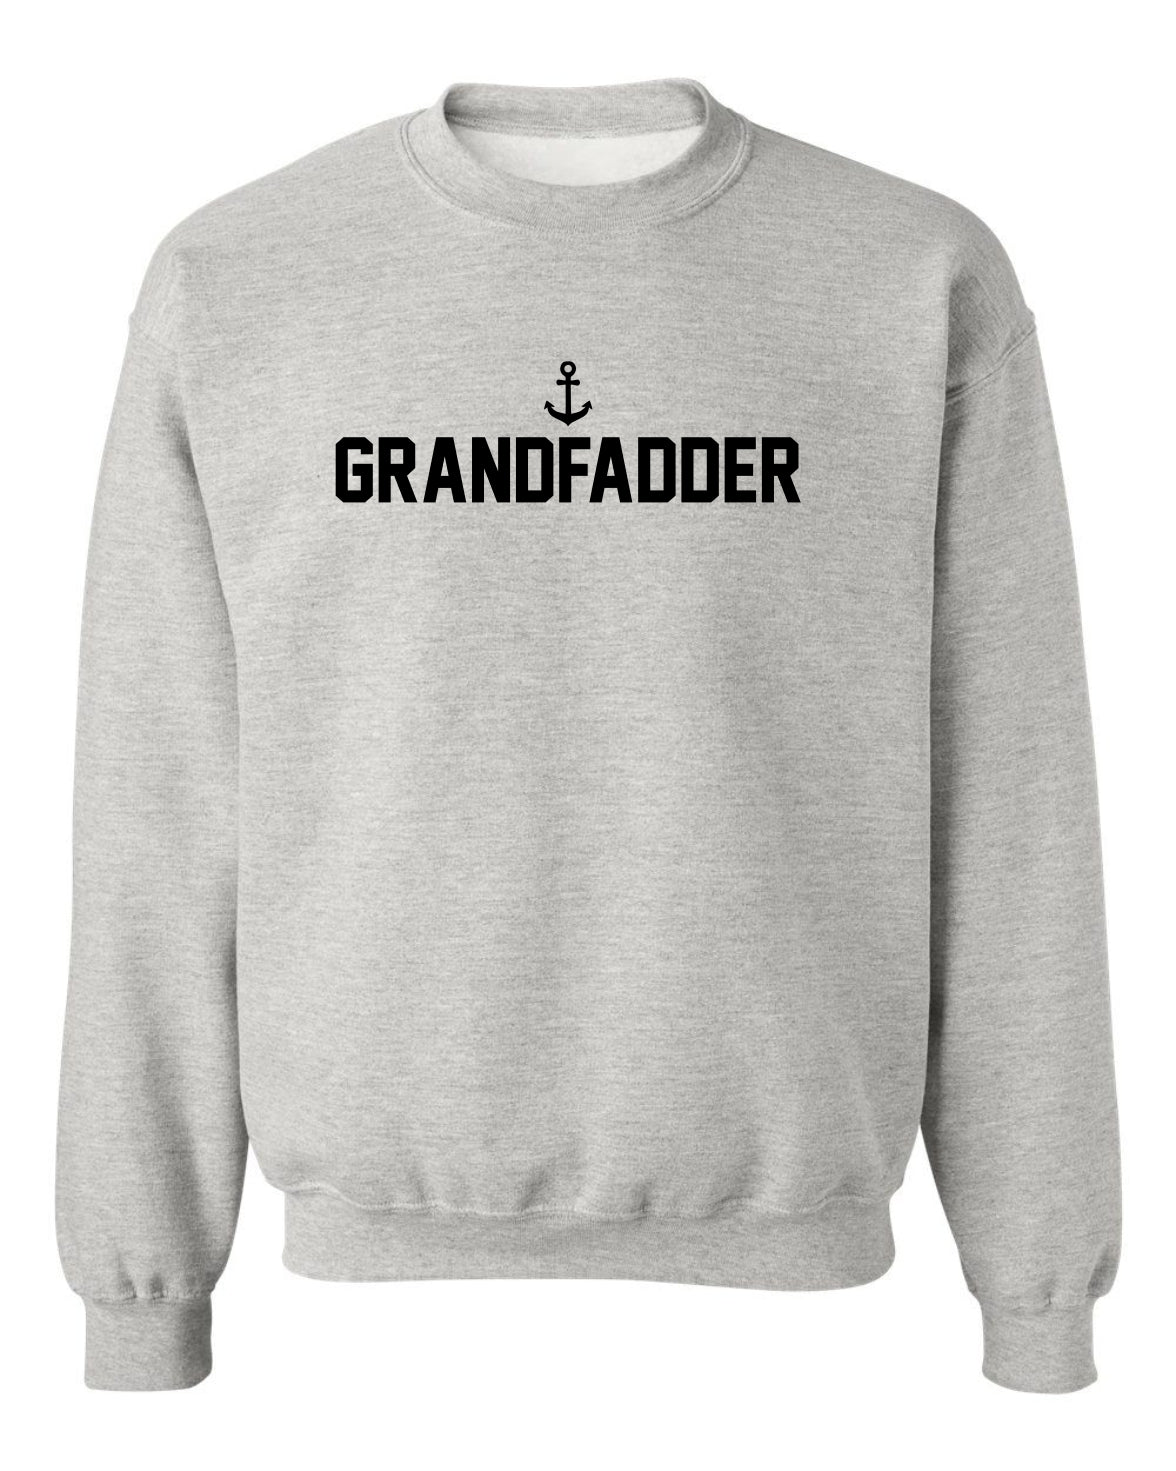 "Grandfadder" Unisex Crewneck Sweatshirt